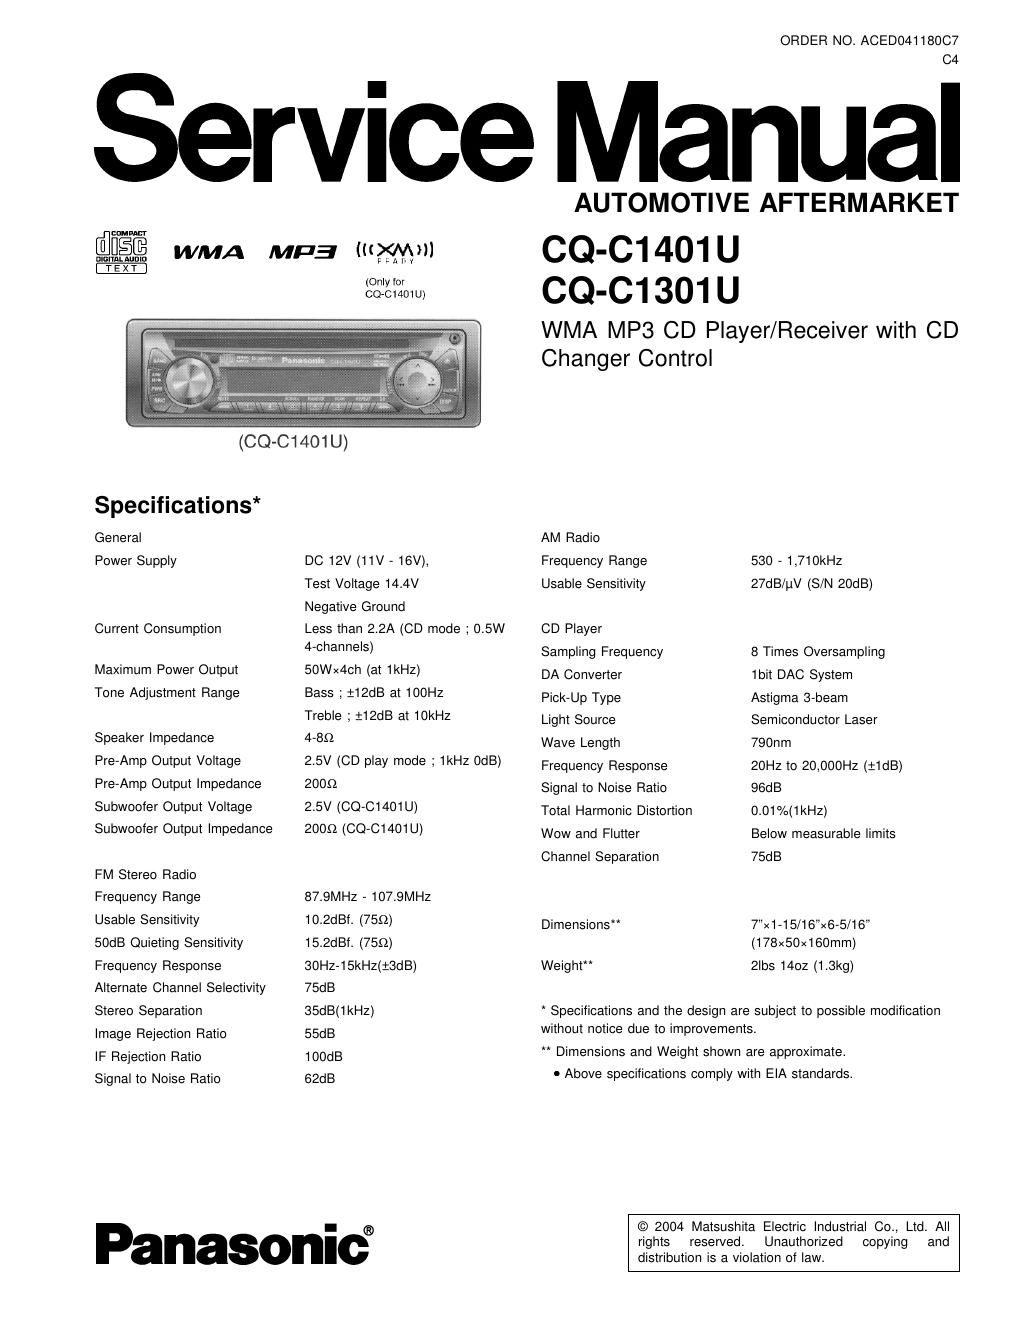 panasonic cq c 1401 u service manual